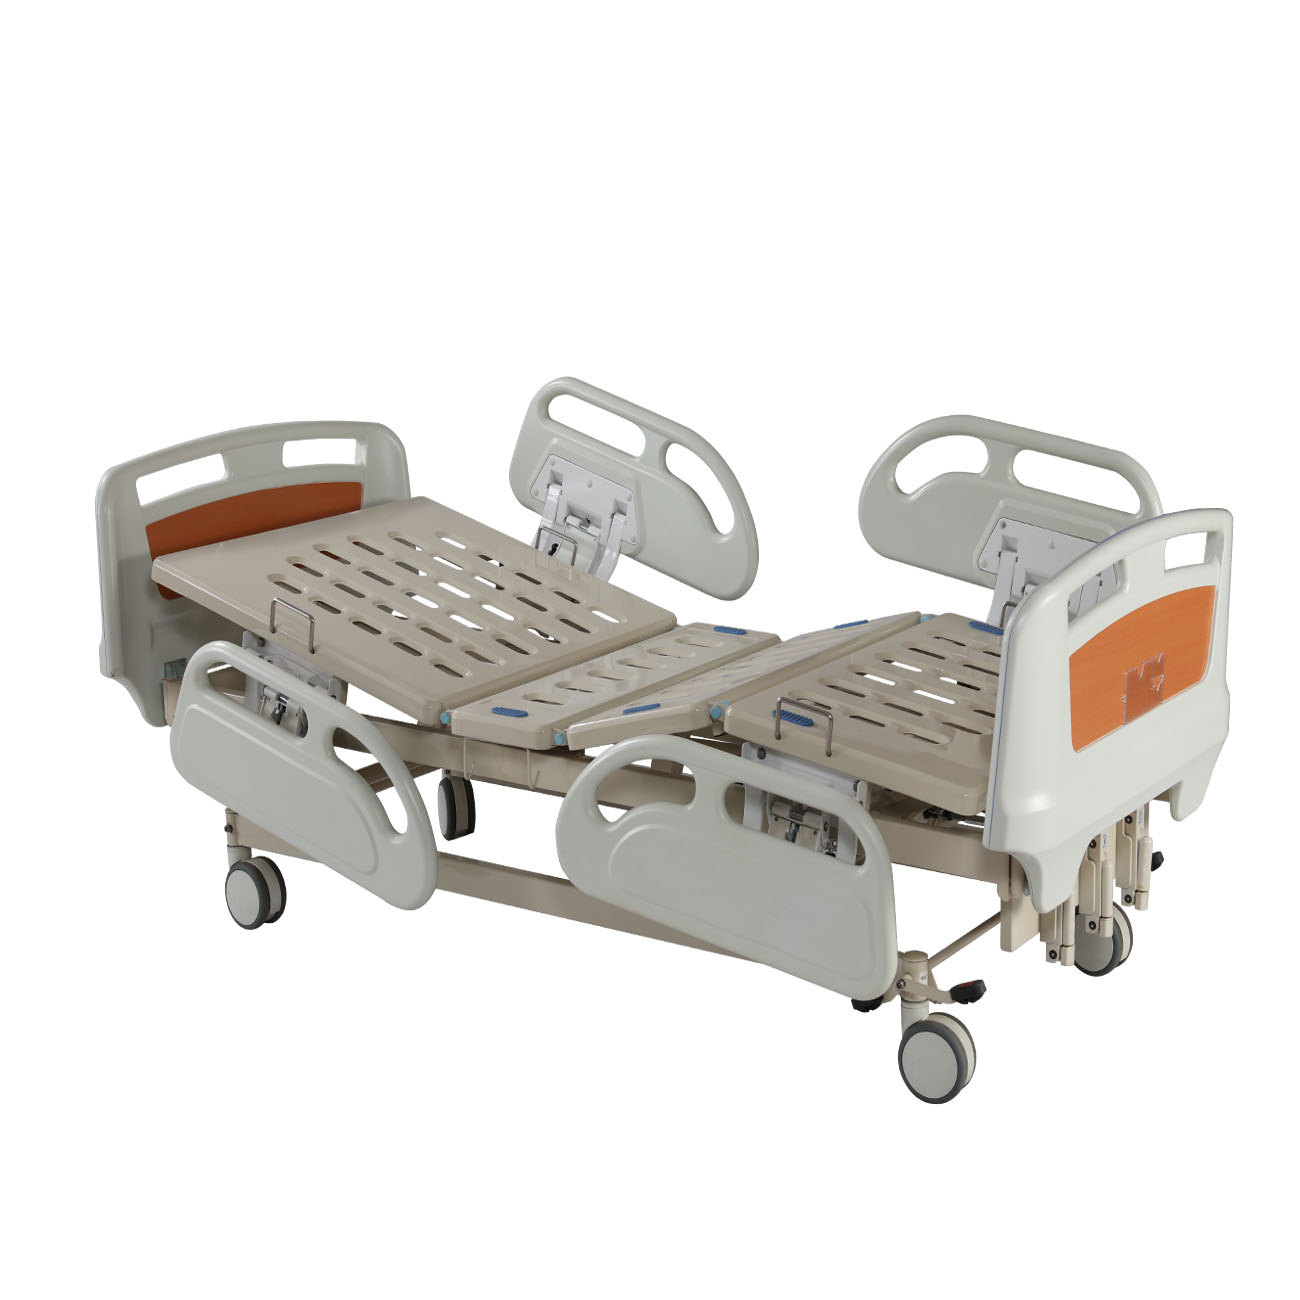 HL-A134B TYPE I Manual Hospital Bed